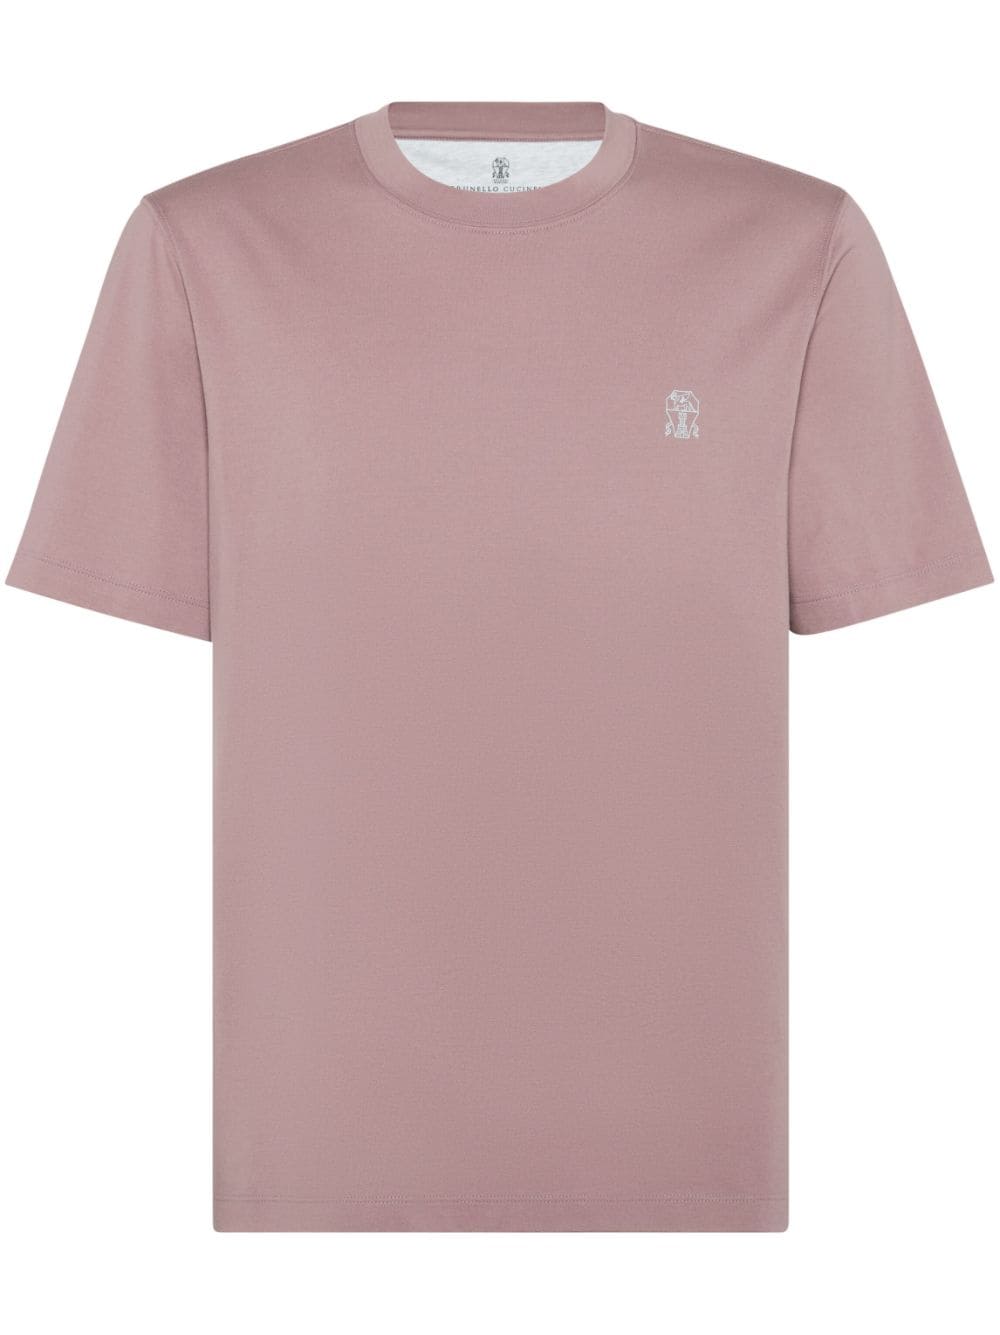 T-shirt rose avec logo